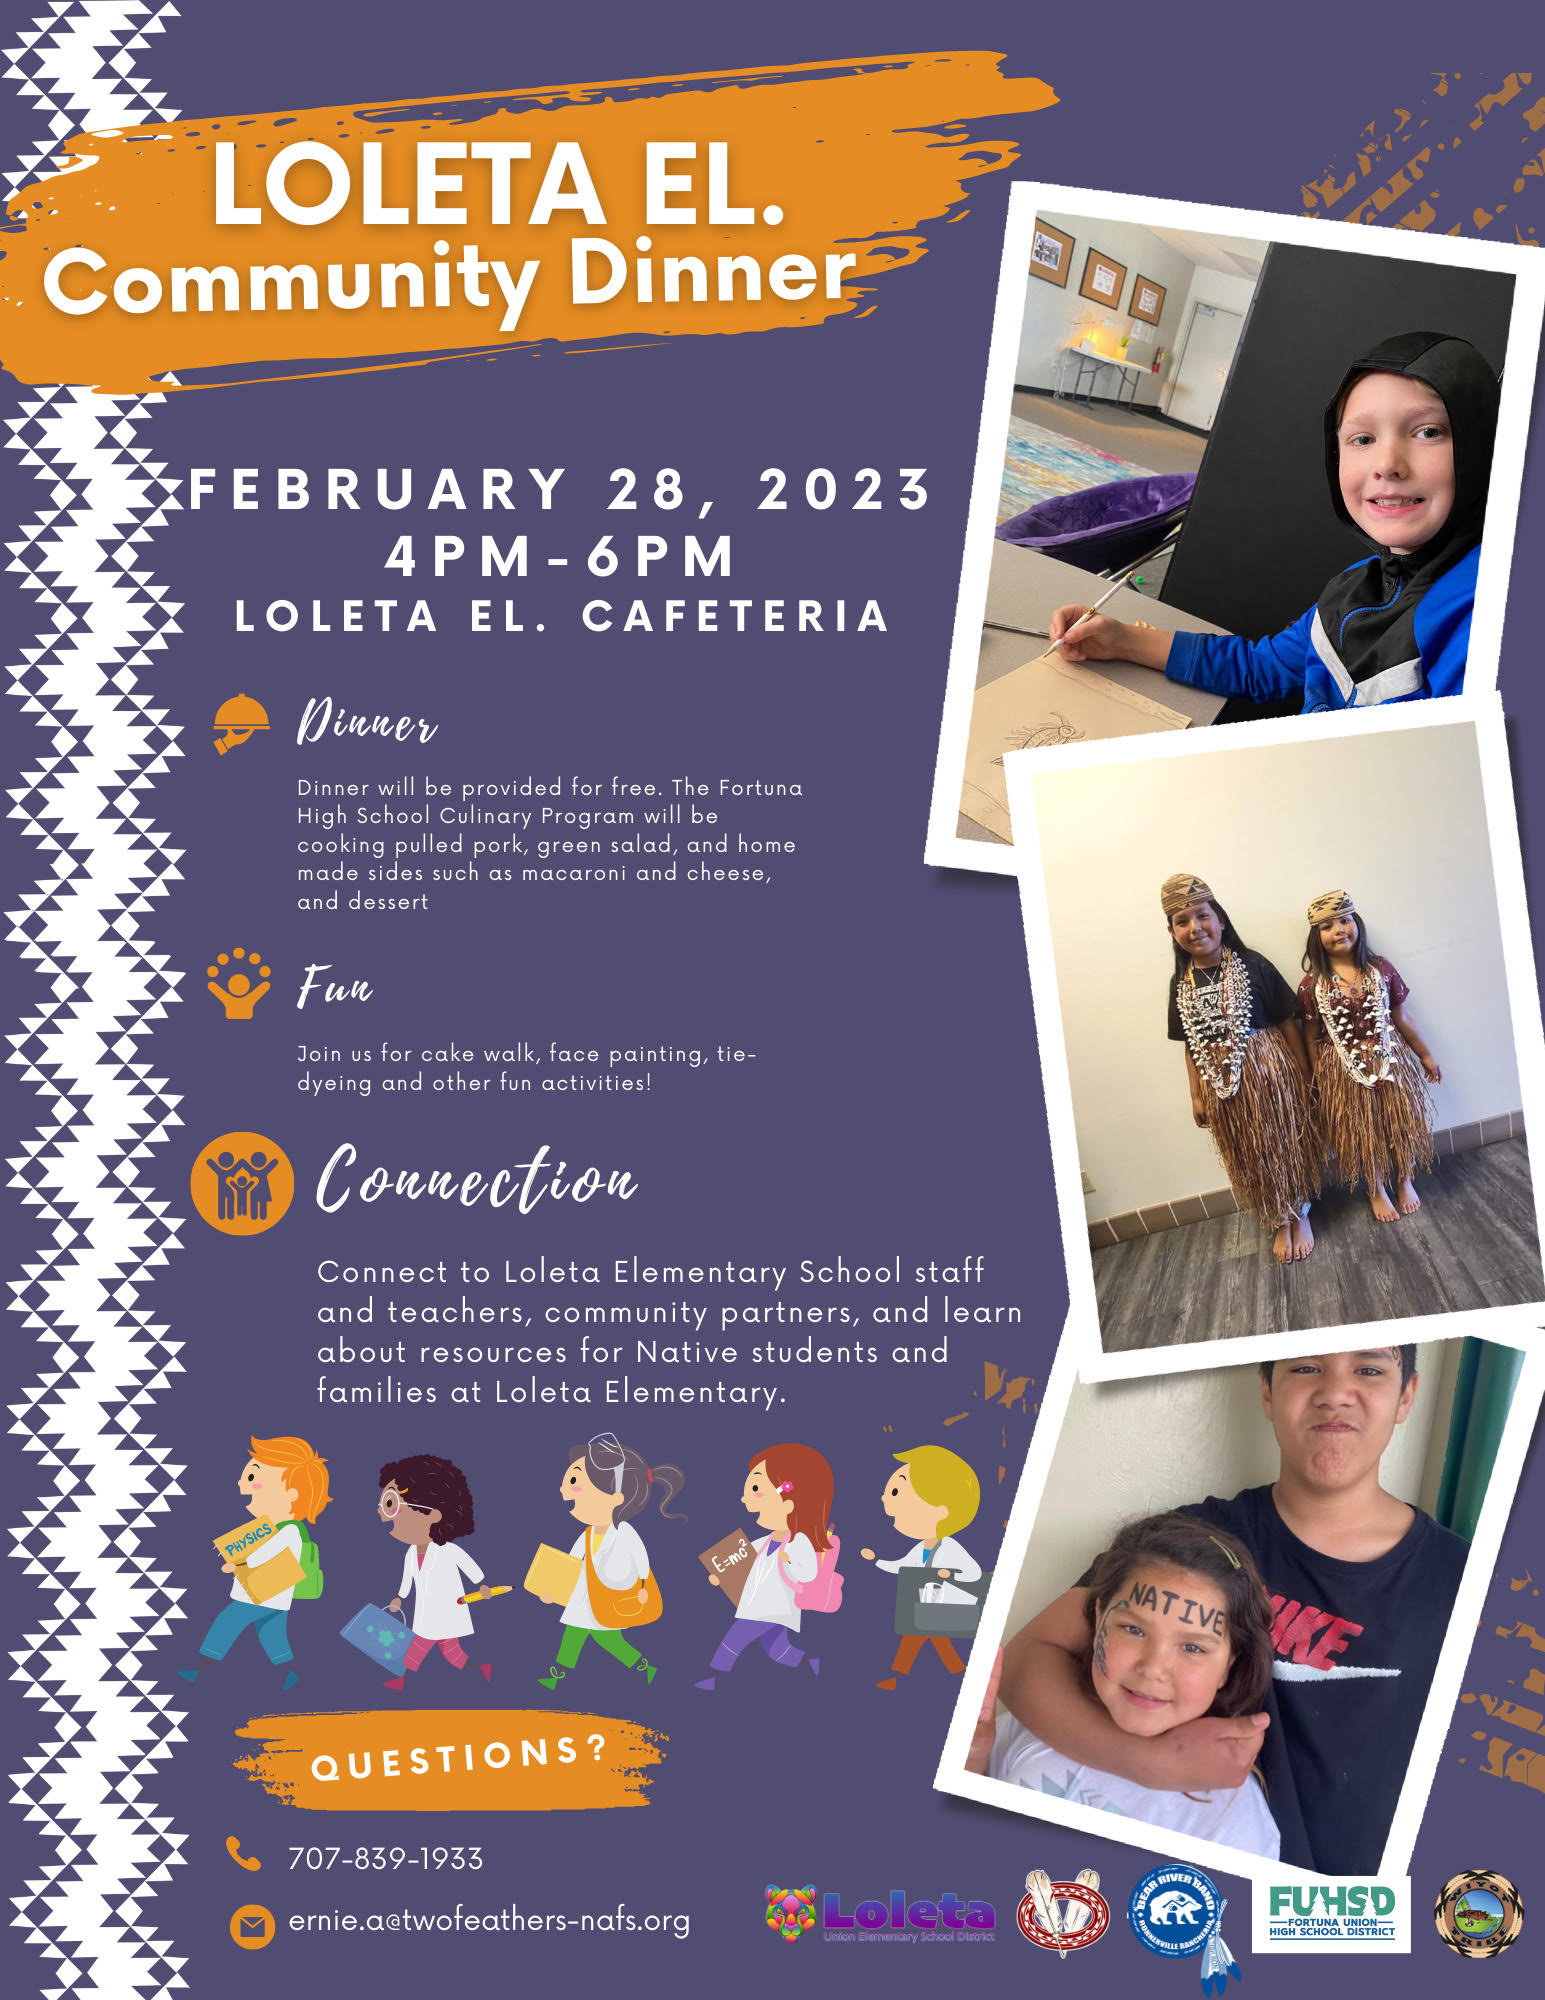 Loleta EL. Community Dinner  Feb 28, 2023. 4 to 6 PM at Loleta School Cafeteria